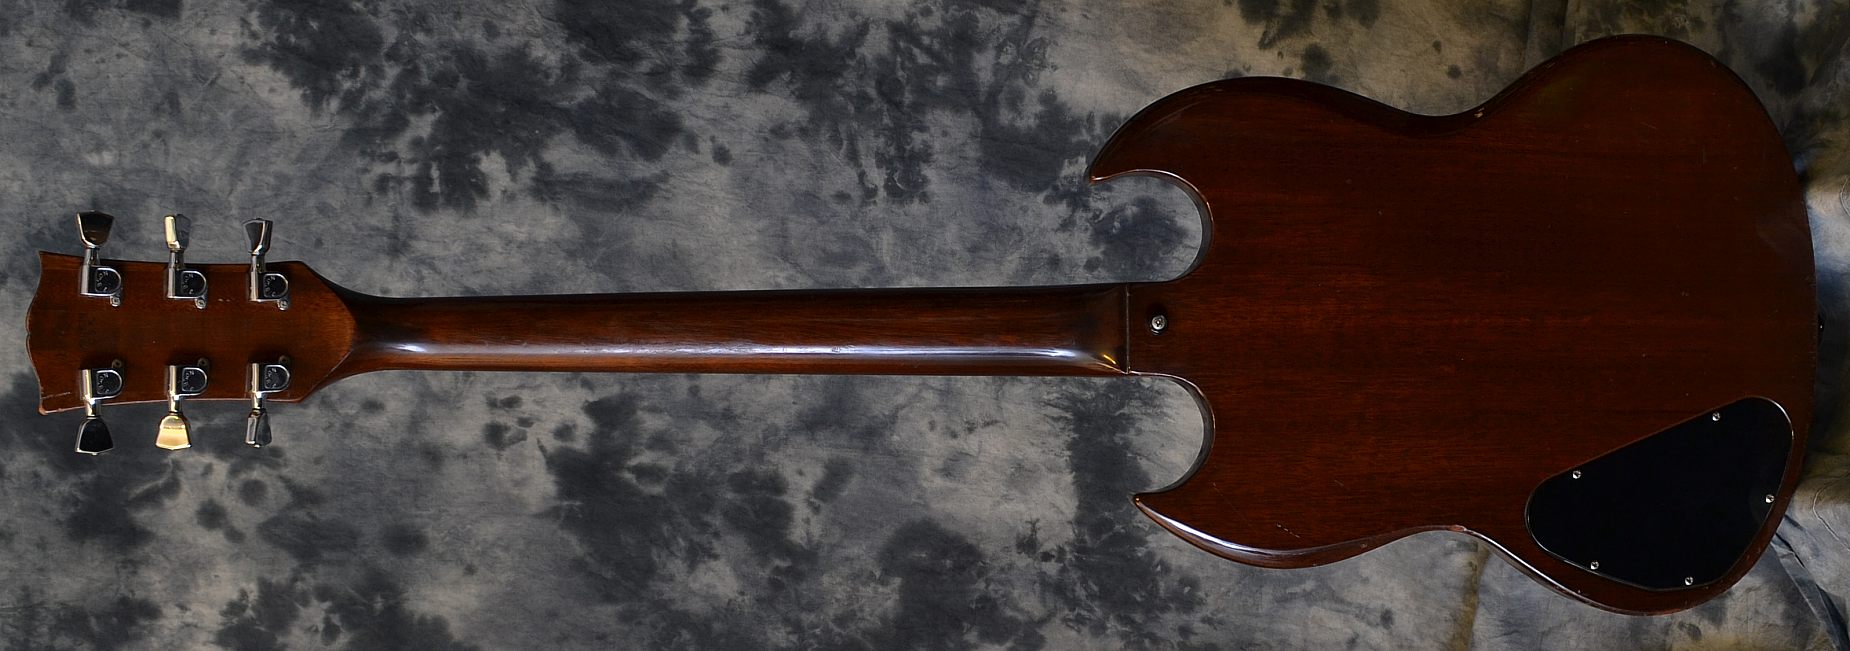 Gibson_SG Standard_1972(C)_back